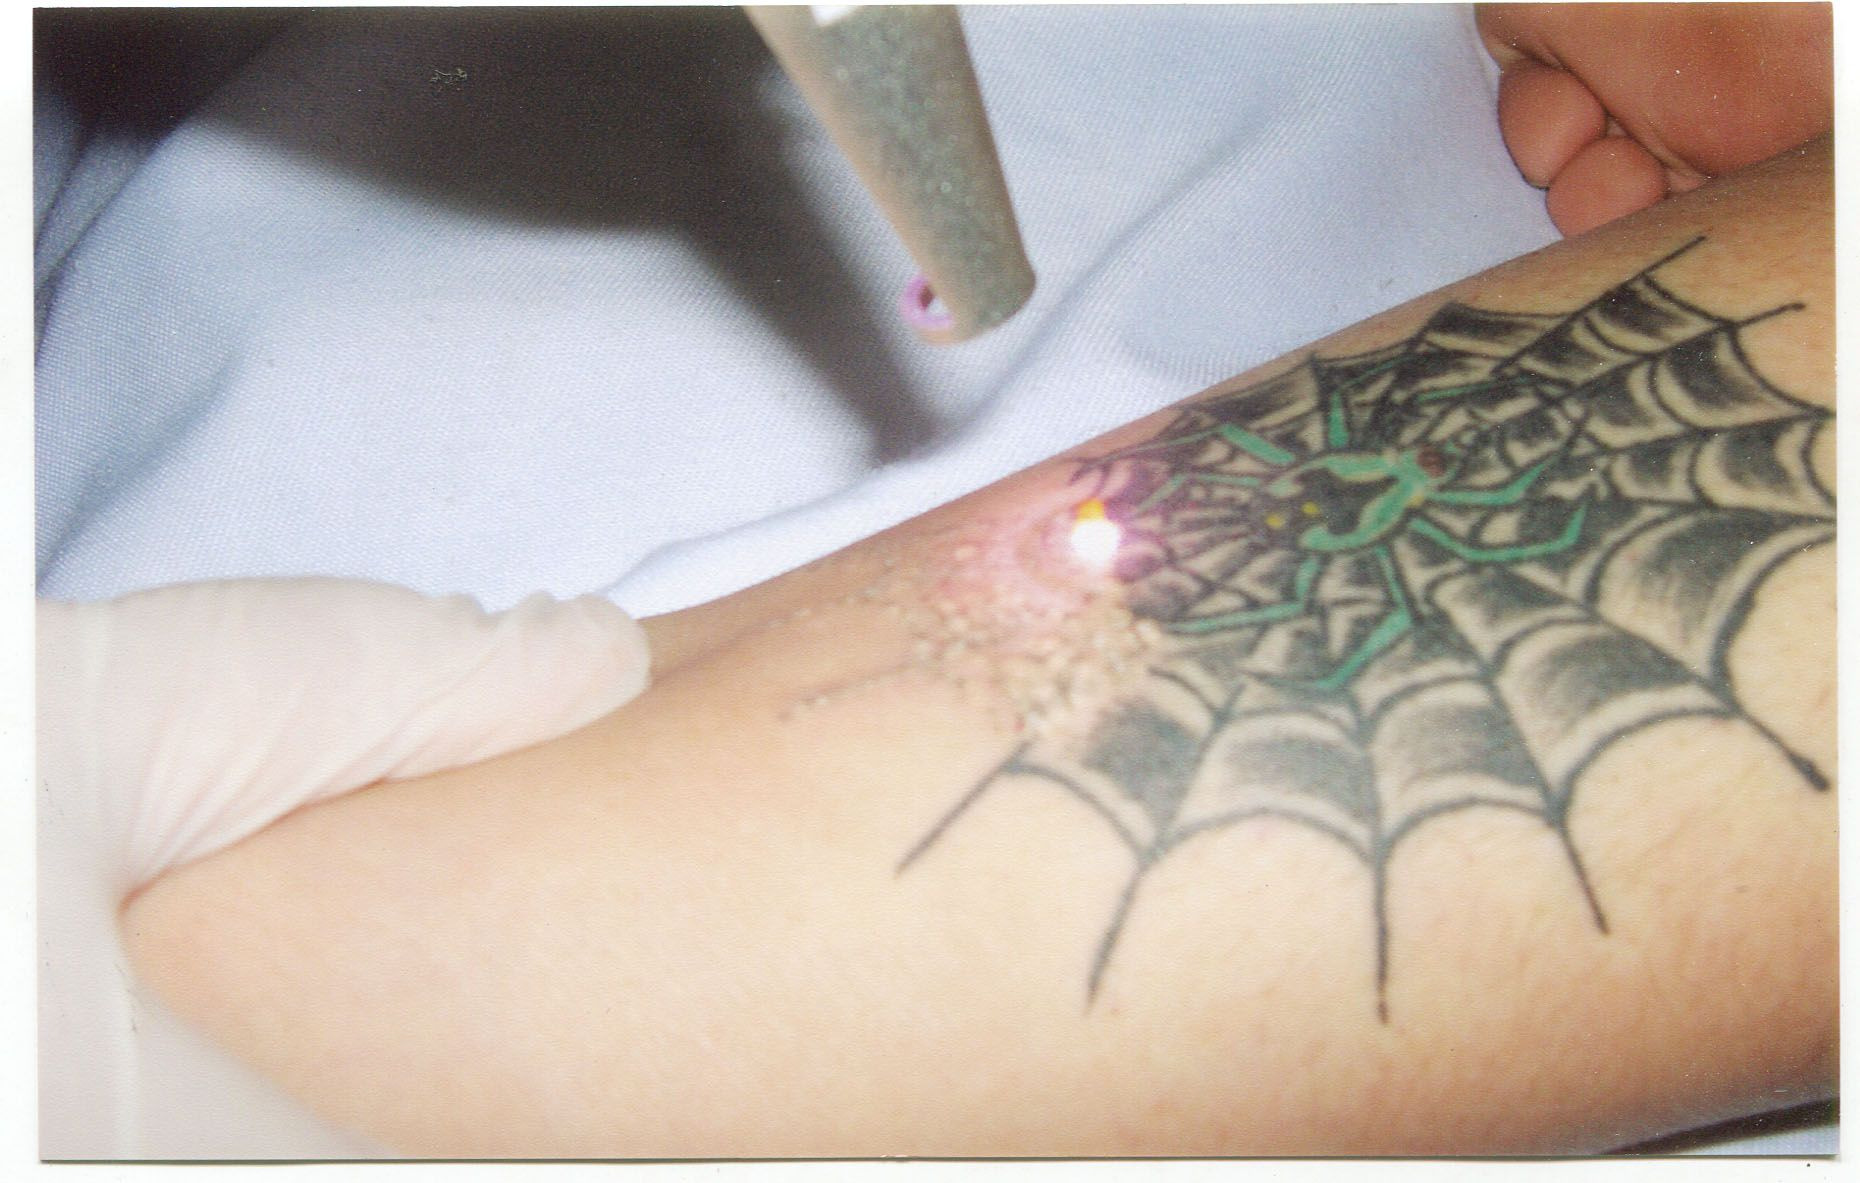 Xóa xăm - Delete tattoo